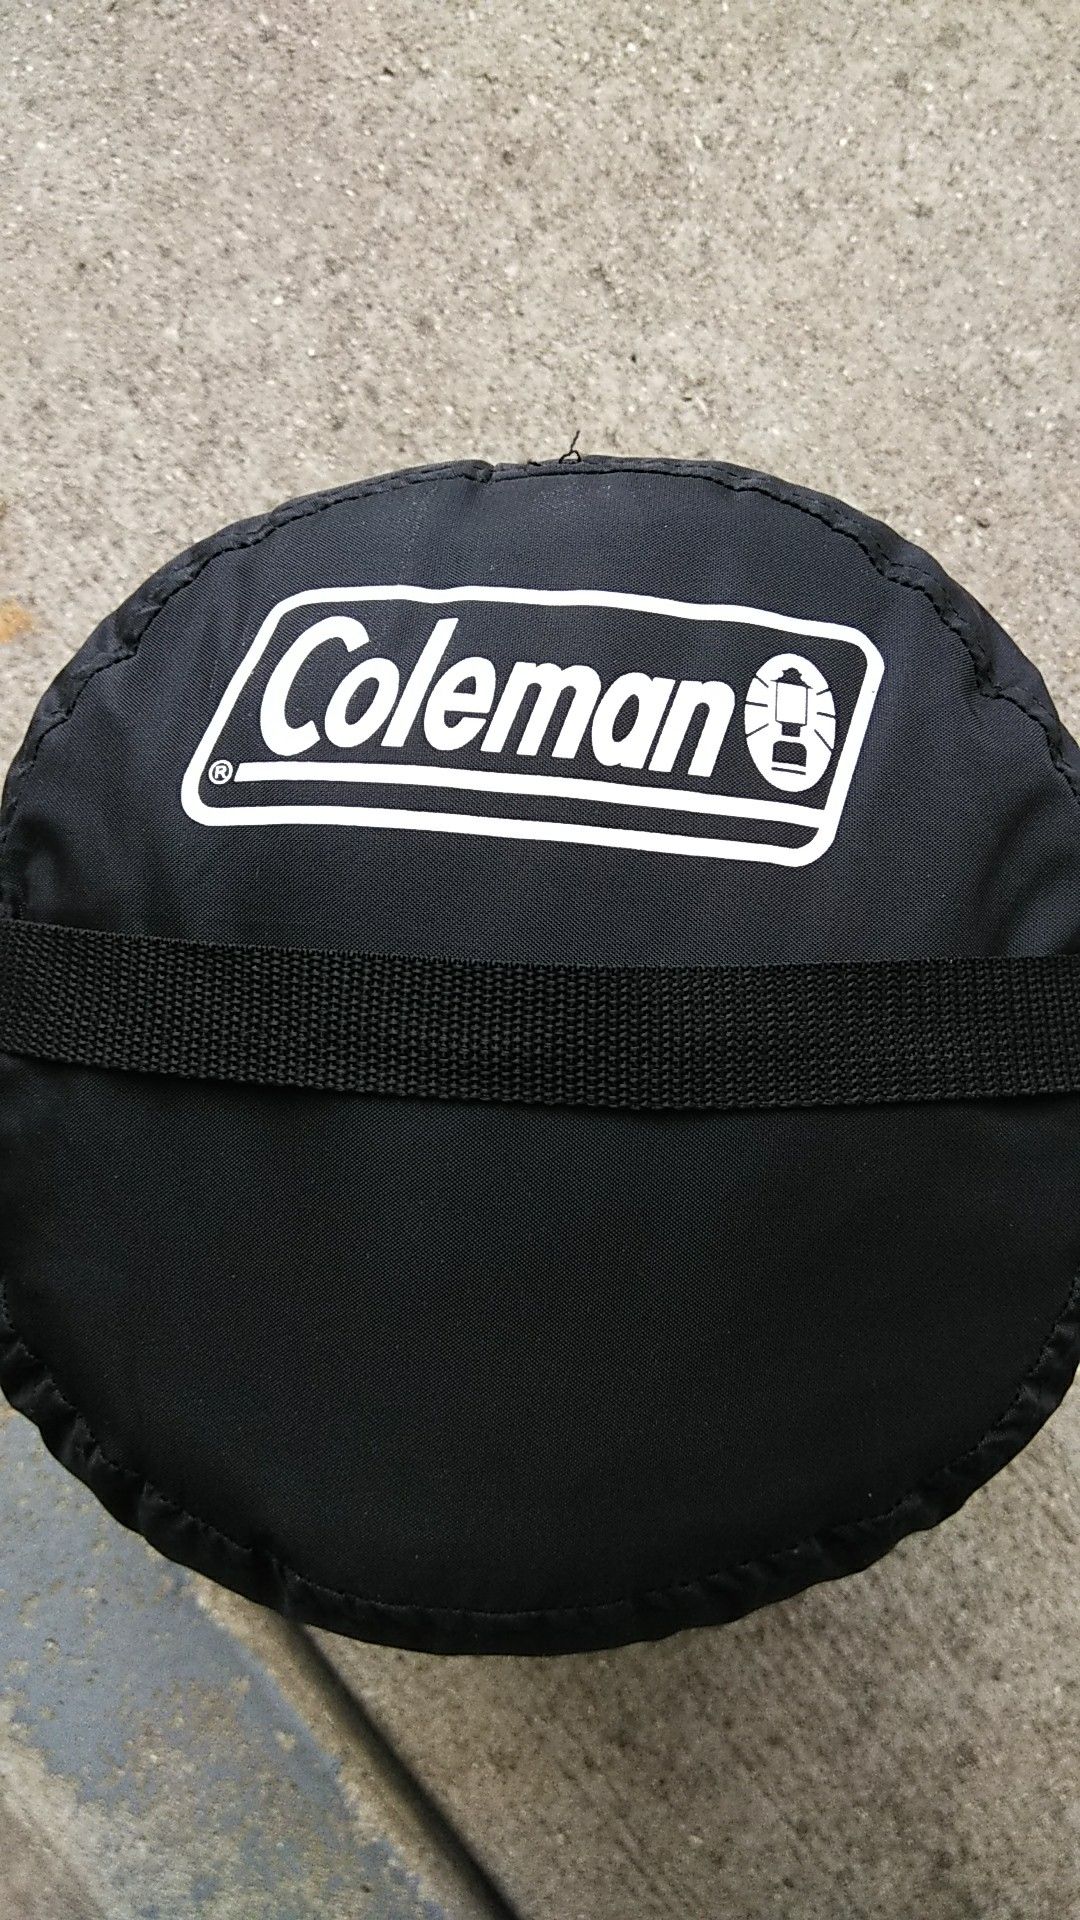 Coleman. Sleeping bag